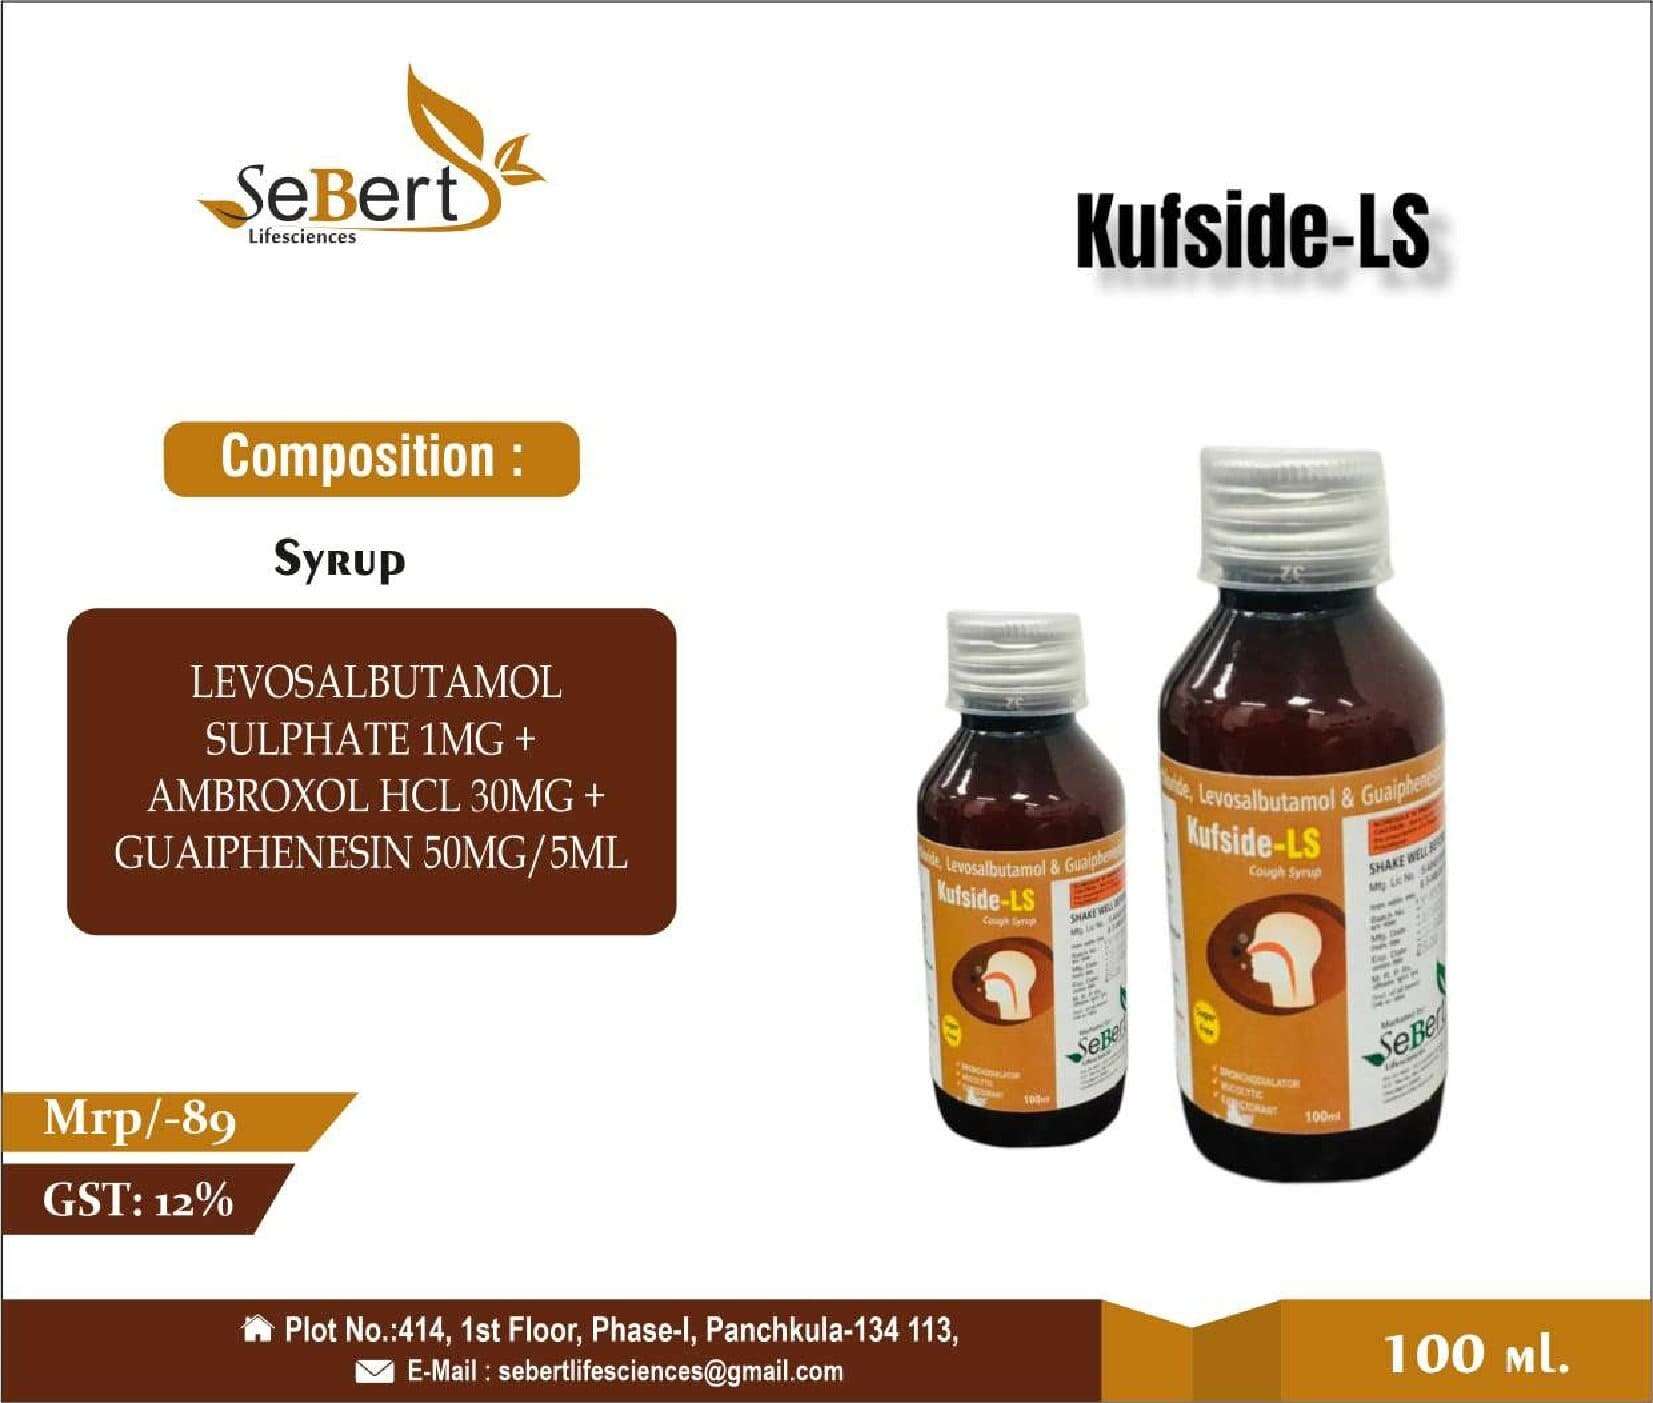 levosalbutamol sulphate 1mg + ambroxol hcl 30mg + guaiphenesin 50mg/5ml syp